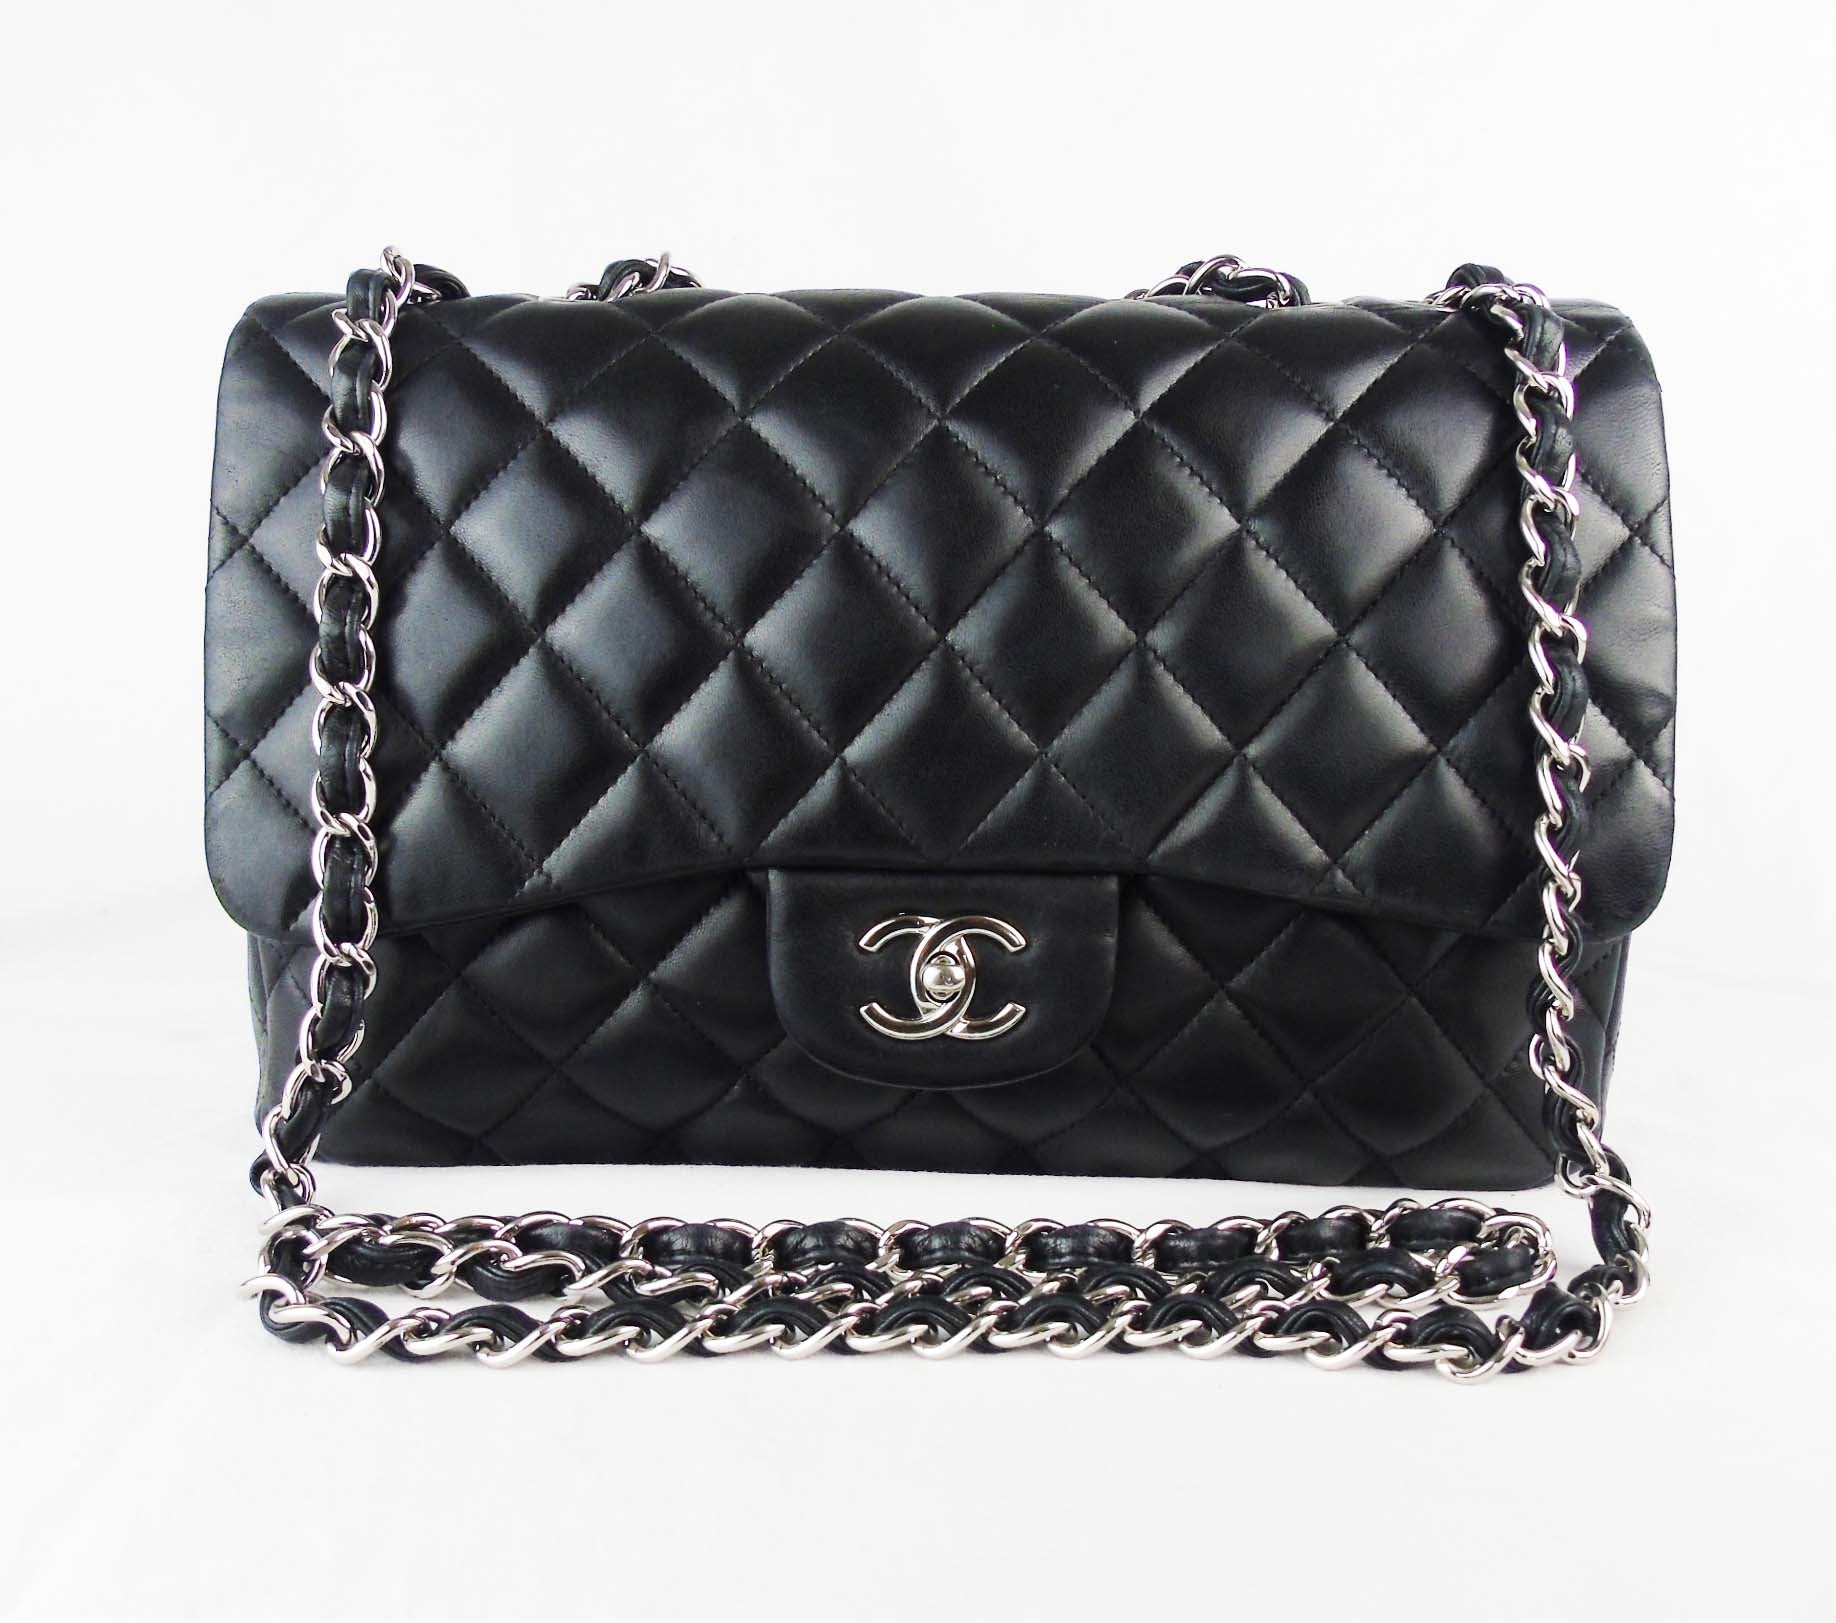 CHANEL black leather jumbo flap bag SHW – Loubi, Lou & Coco